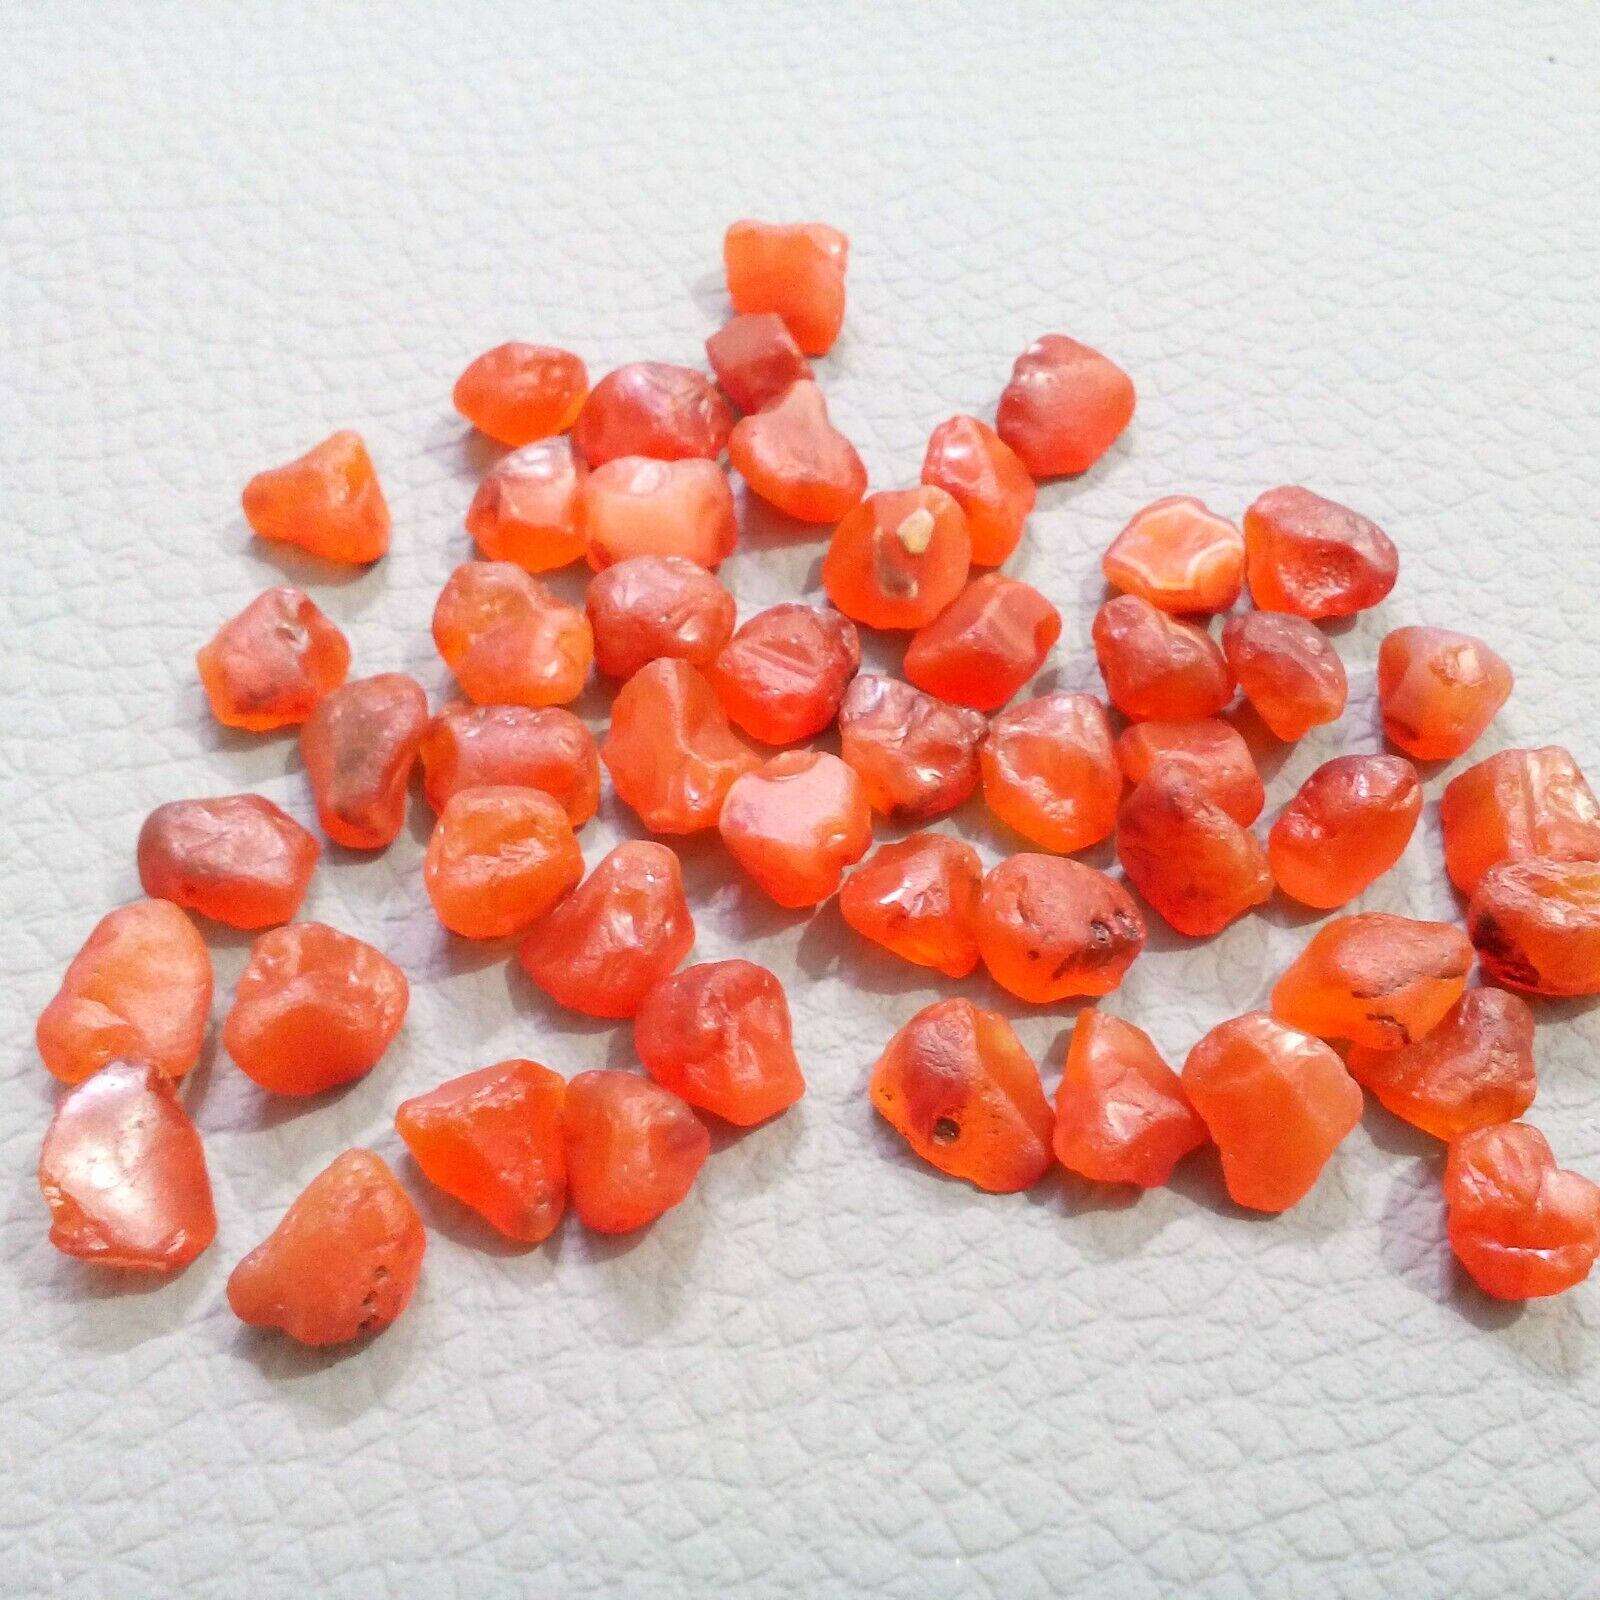 AAA Orange Carnelian 38 Piece Crystal Rough 9-10 MM Natural Carnelian Gemstone